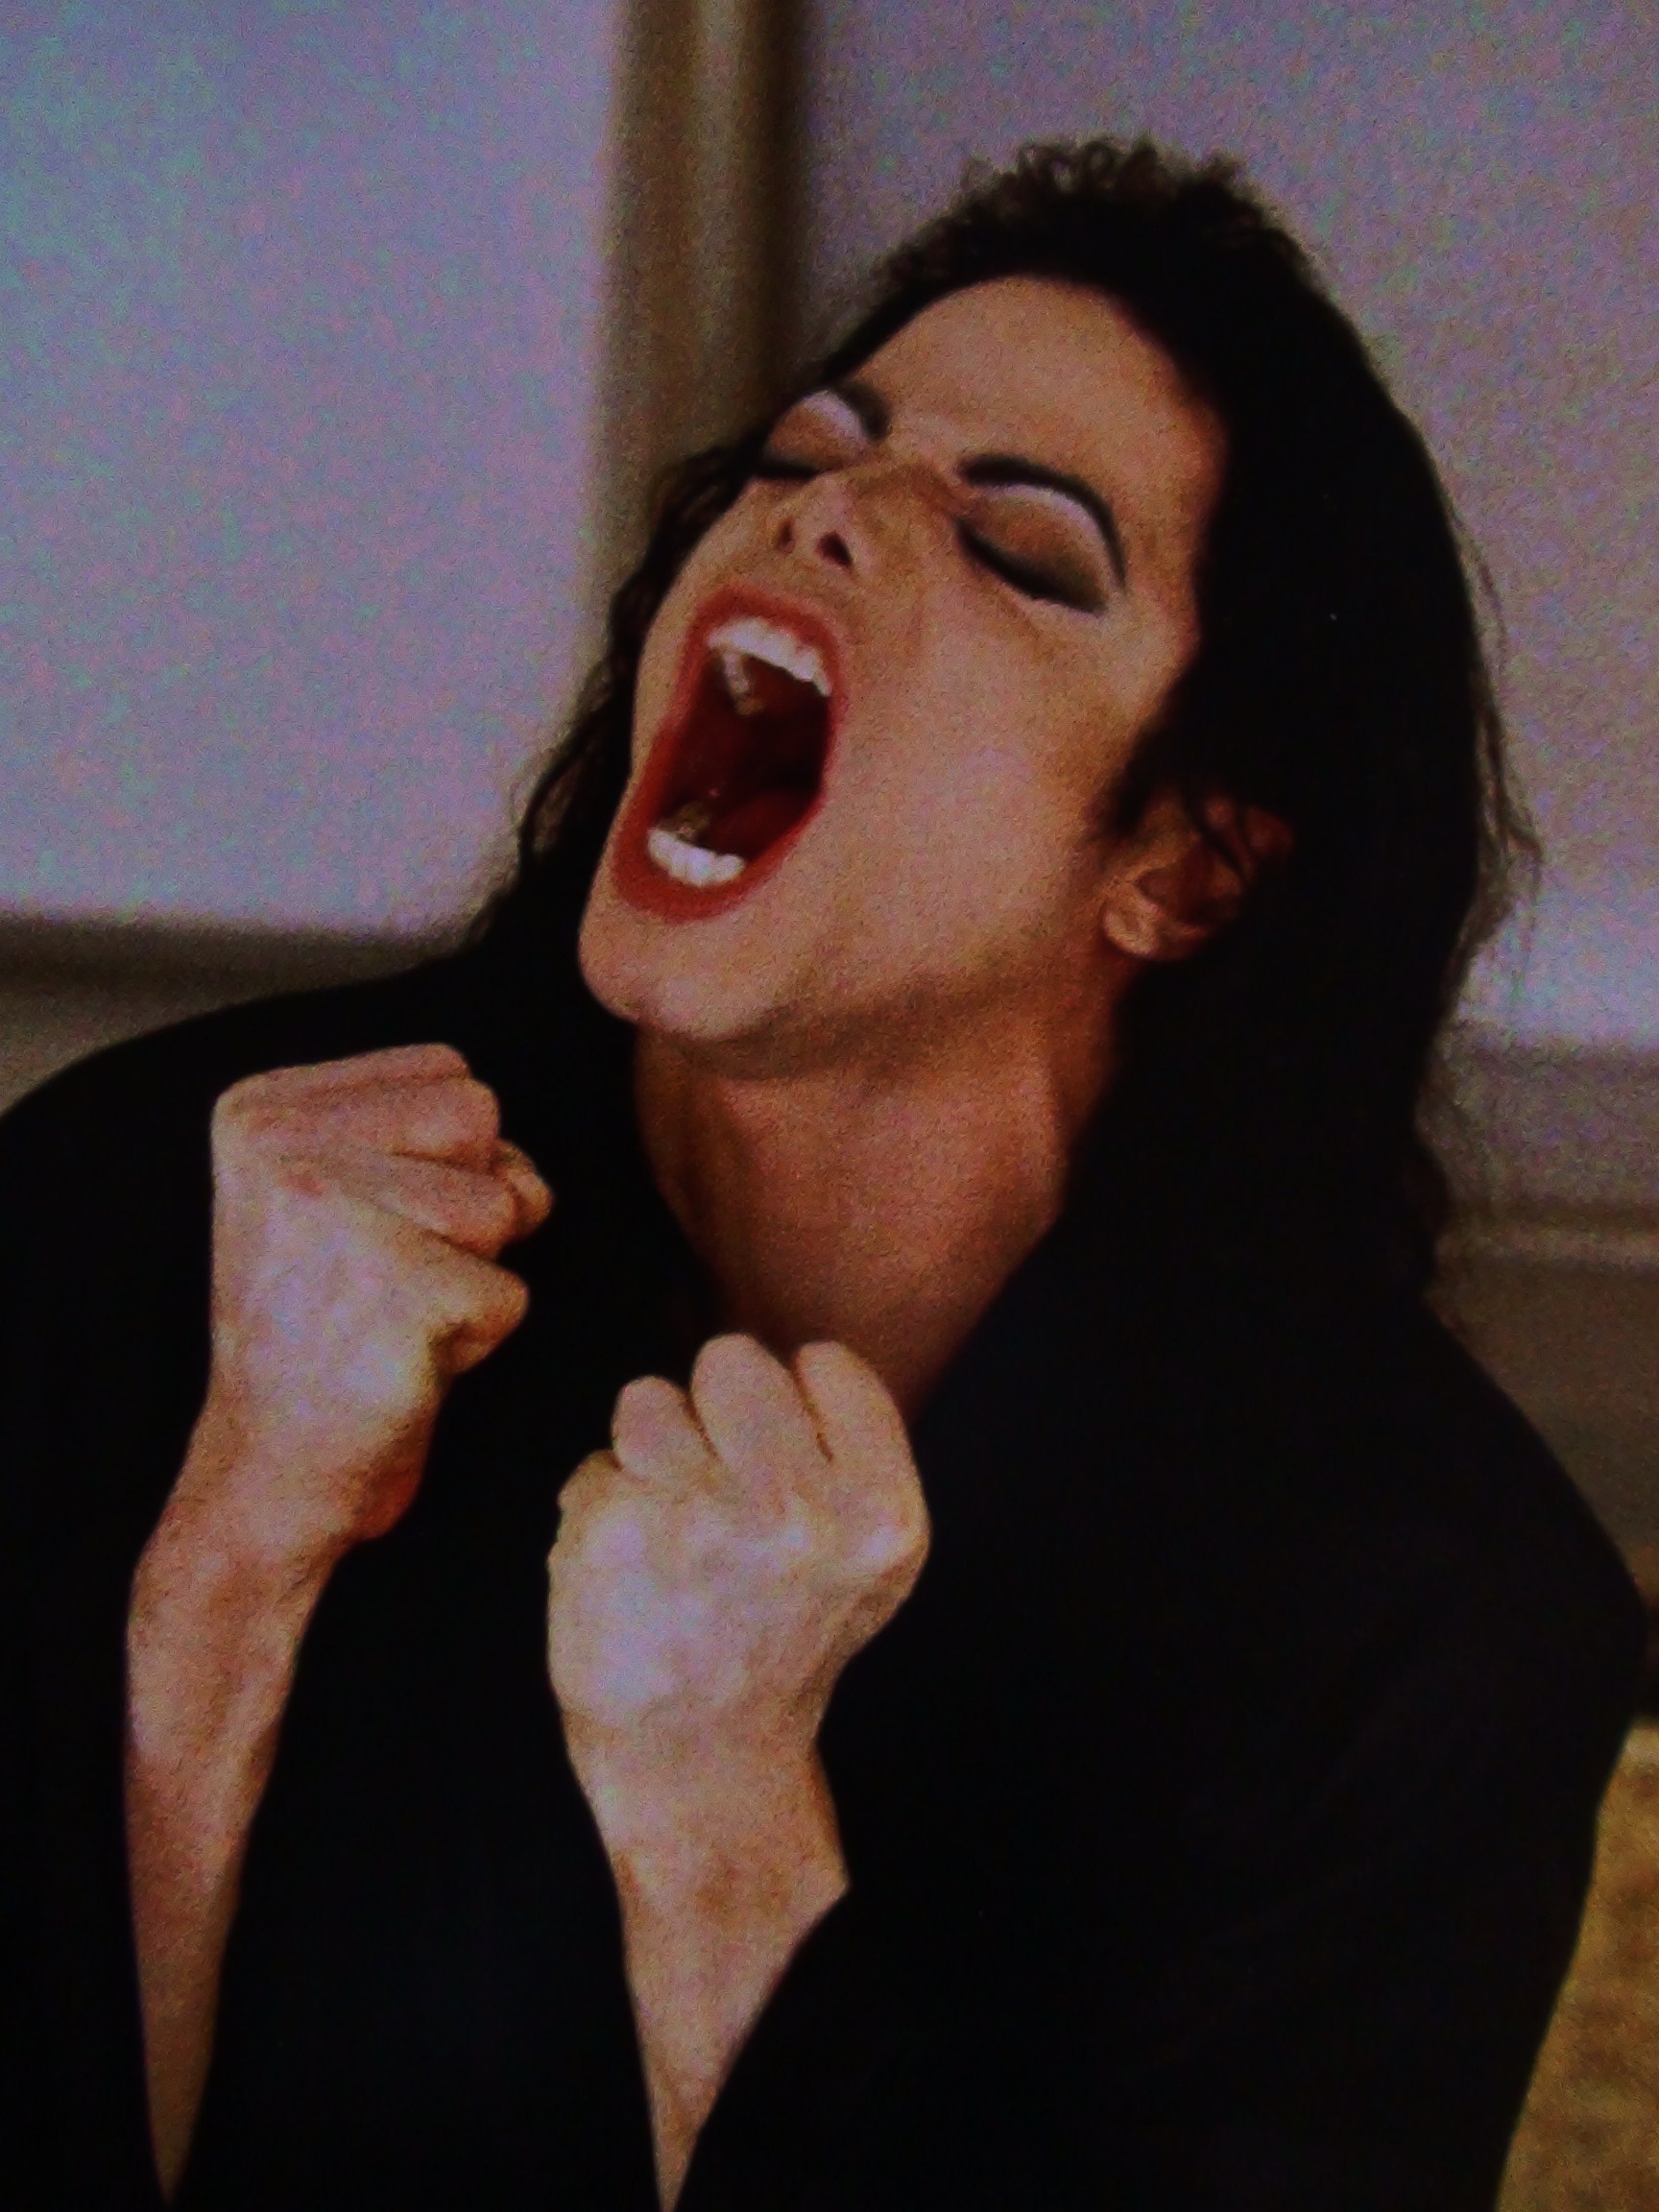 Hd Photos Of Mj - Michael Jackson Images Hd - HD Wallpaper 